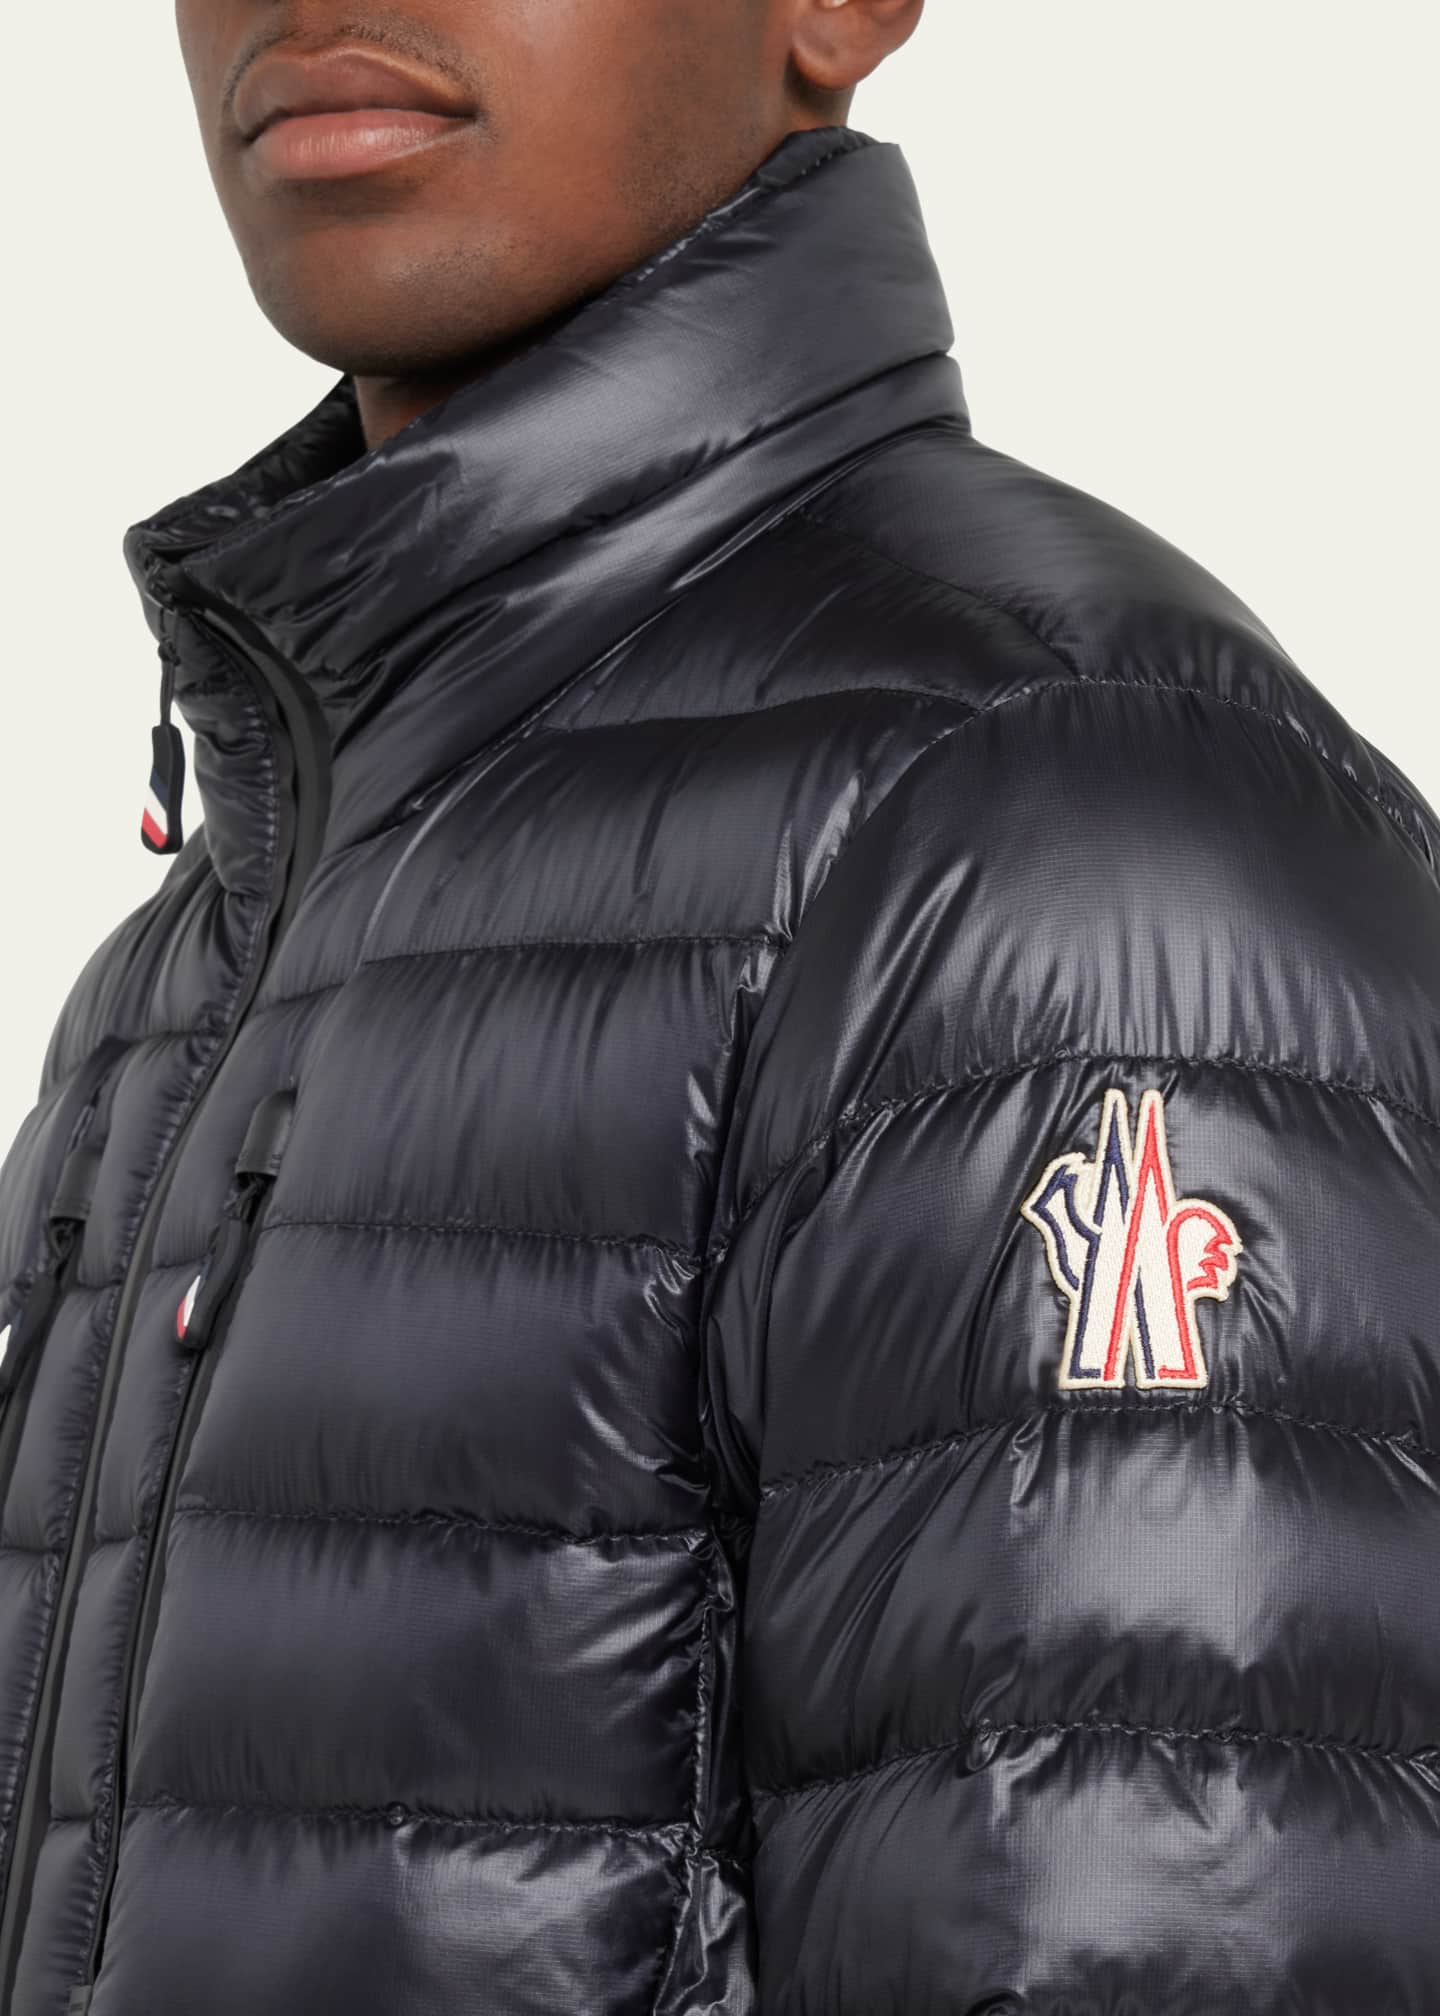 Moncler Grenoble 'Hers' down jacket, Men's Clothing